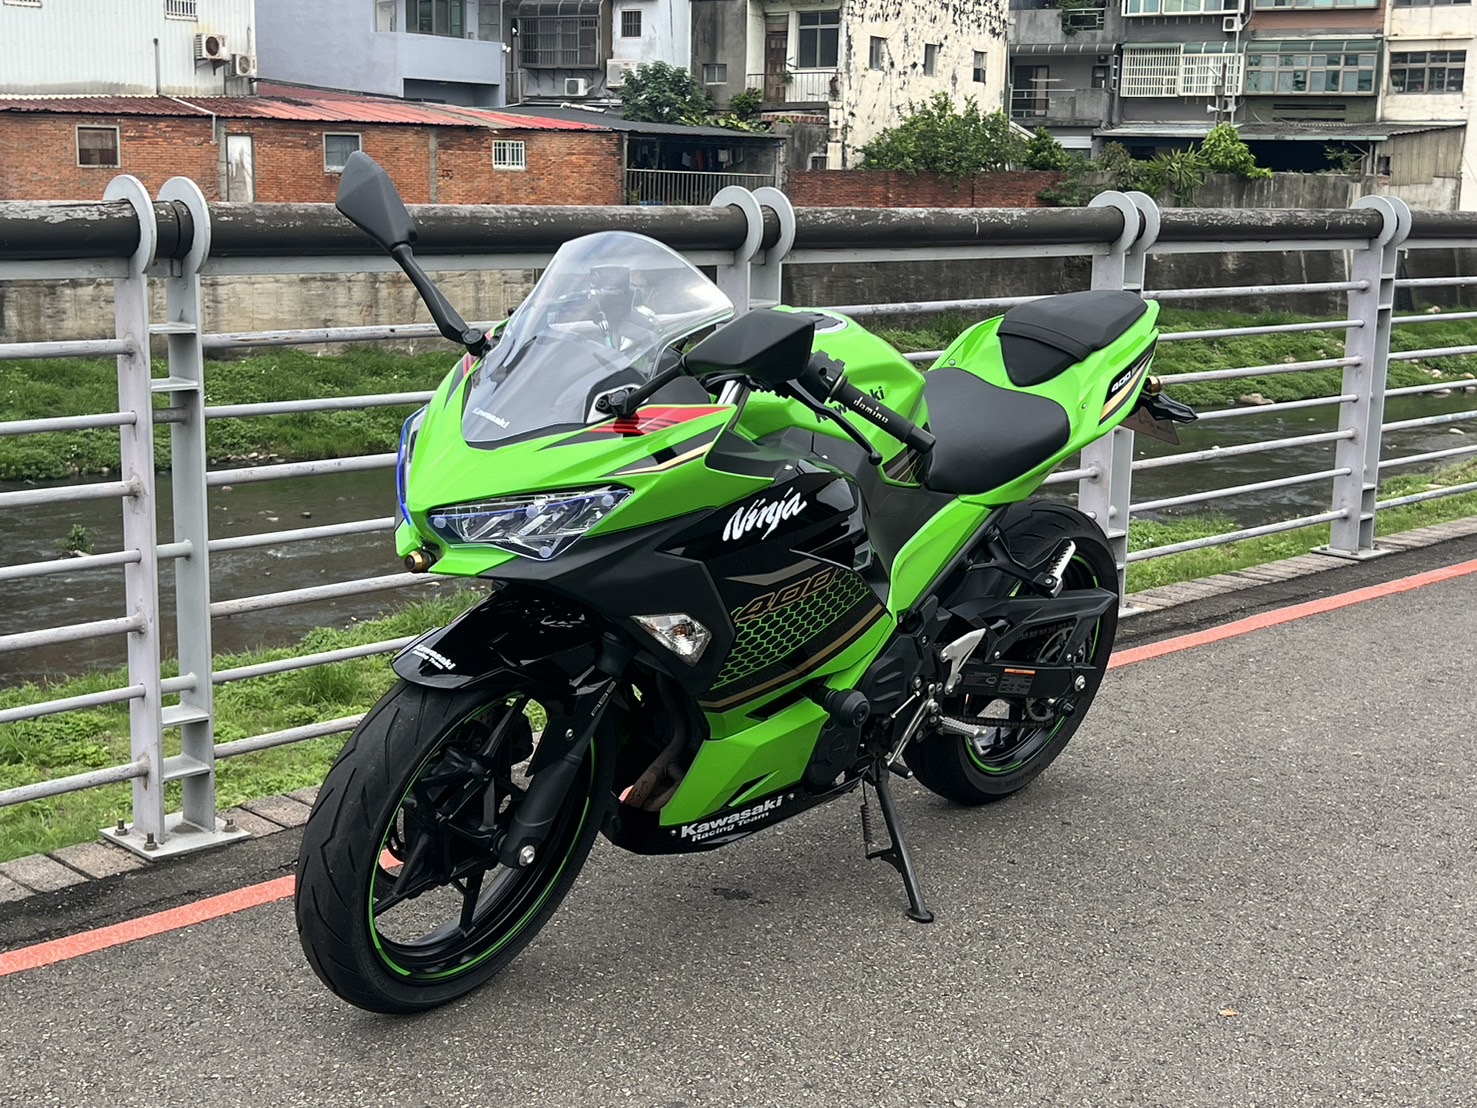 KAWASAKI NINJA400 - 中古/二手車出售中 2020 Kawasaki Ninja400 | Ike 孝森豪重機